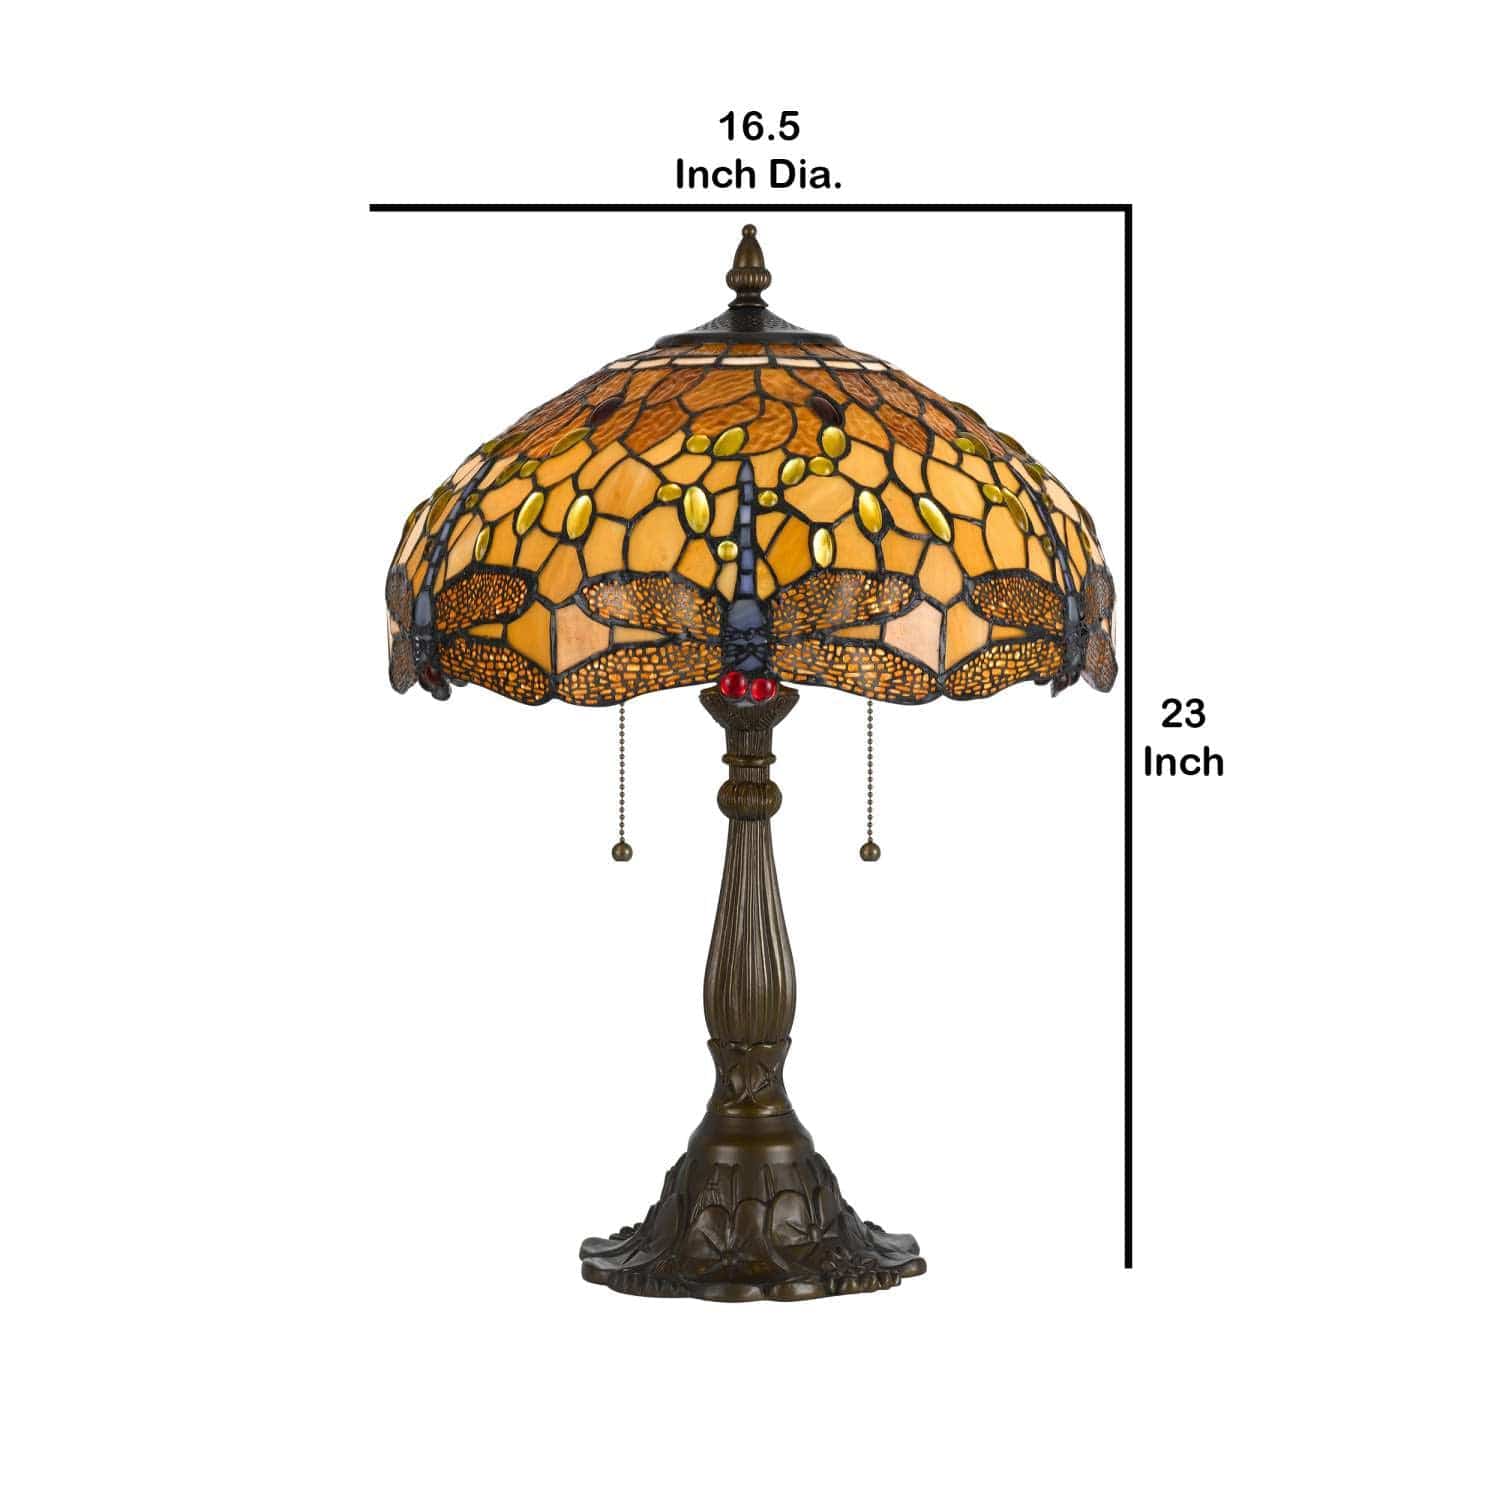 Benzara 2 Bulb Tiffany Table Lamp With Dragonfly Design Shade, Multicolor By Benzara Table Lamps BM223636